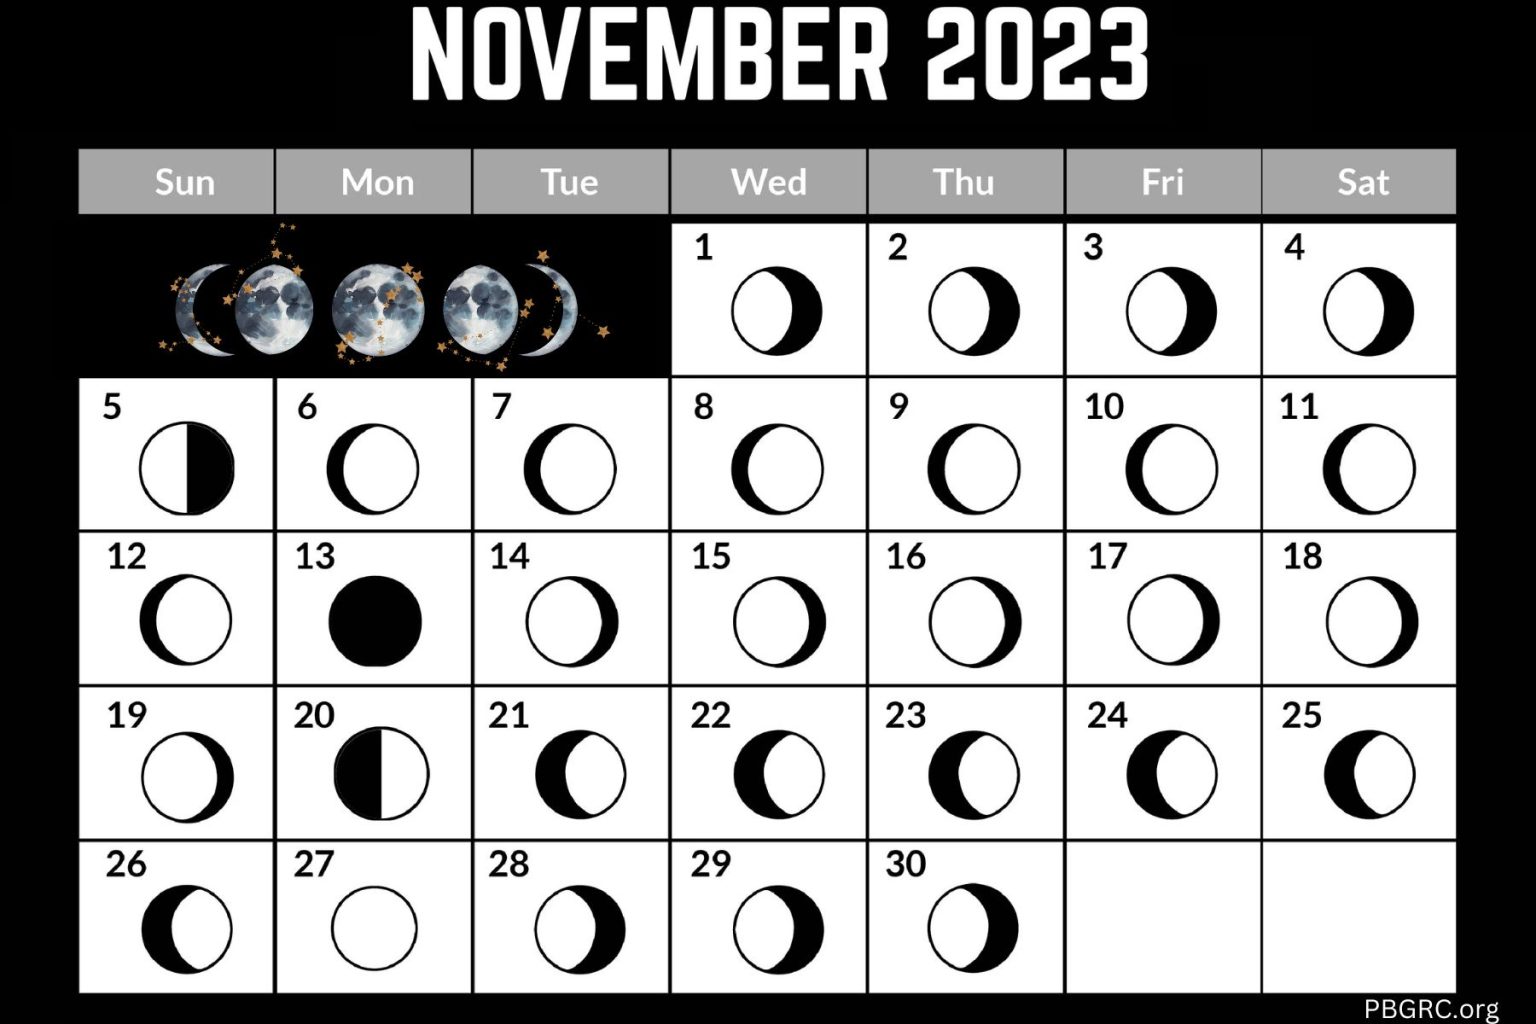 Lunar November 2023 Calendar Moon Phases With Dates